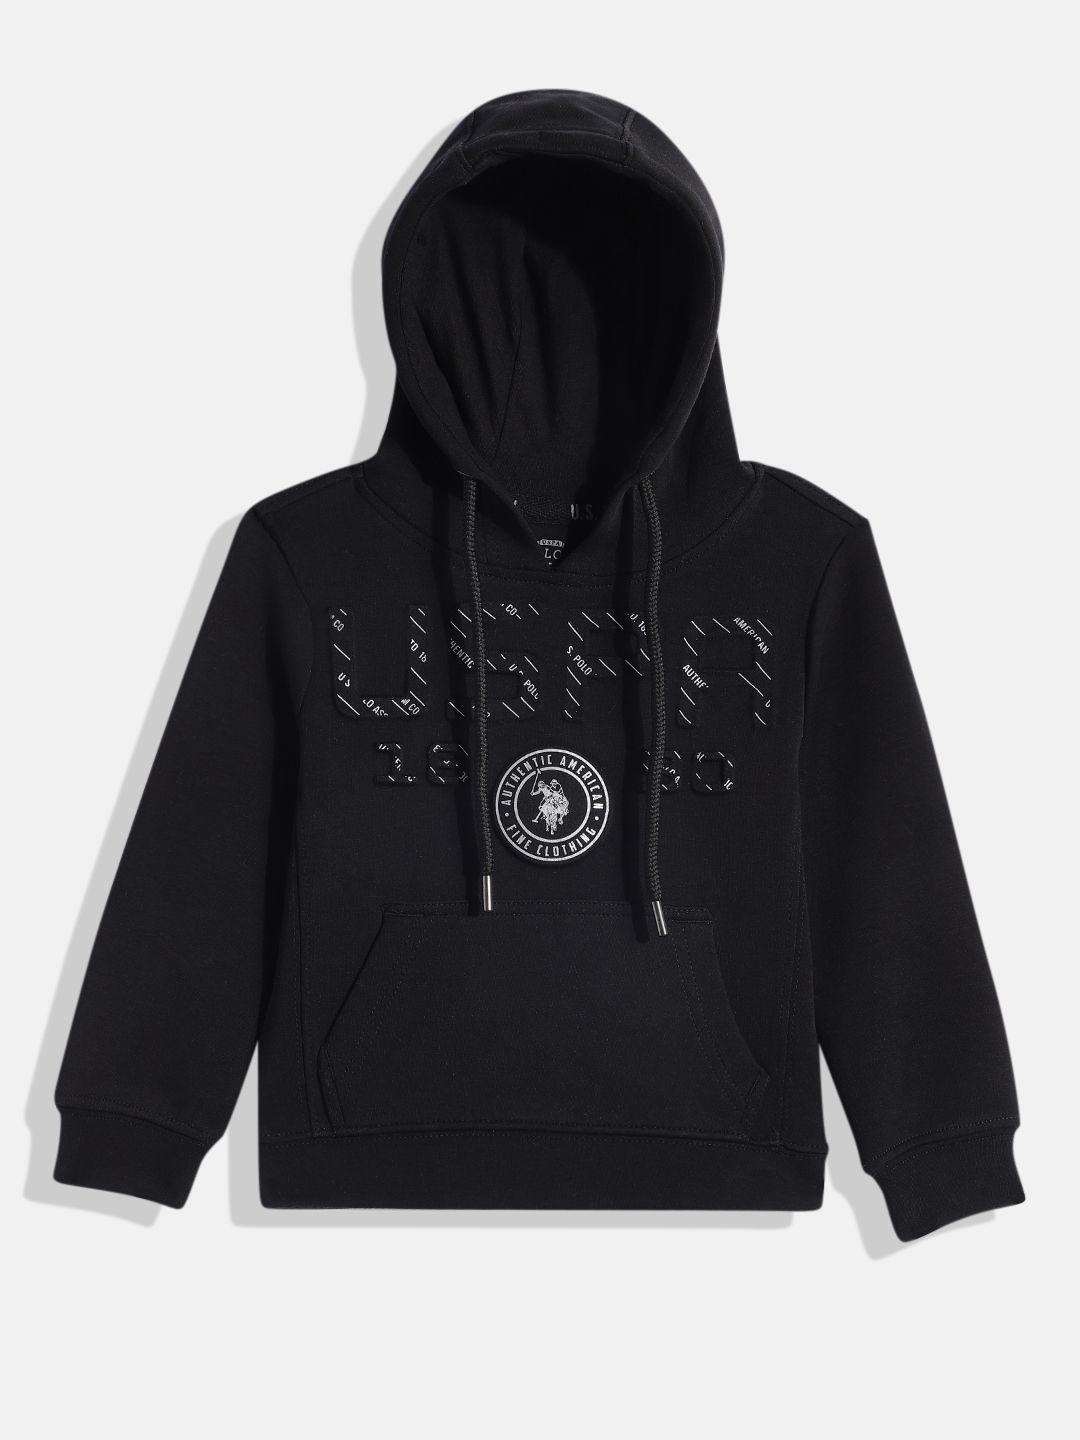 u.s. polo assn. kids boys black brand logo embossed hooded sweatshirt